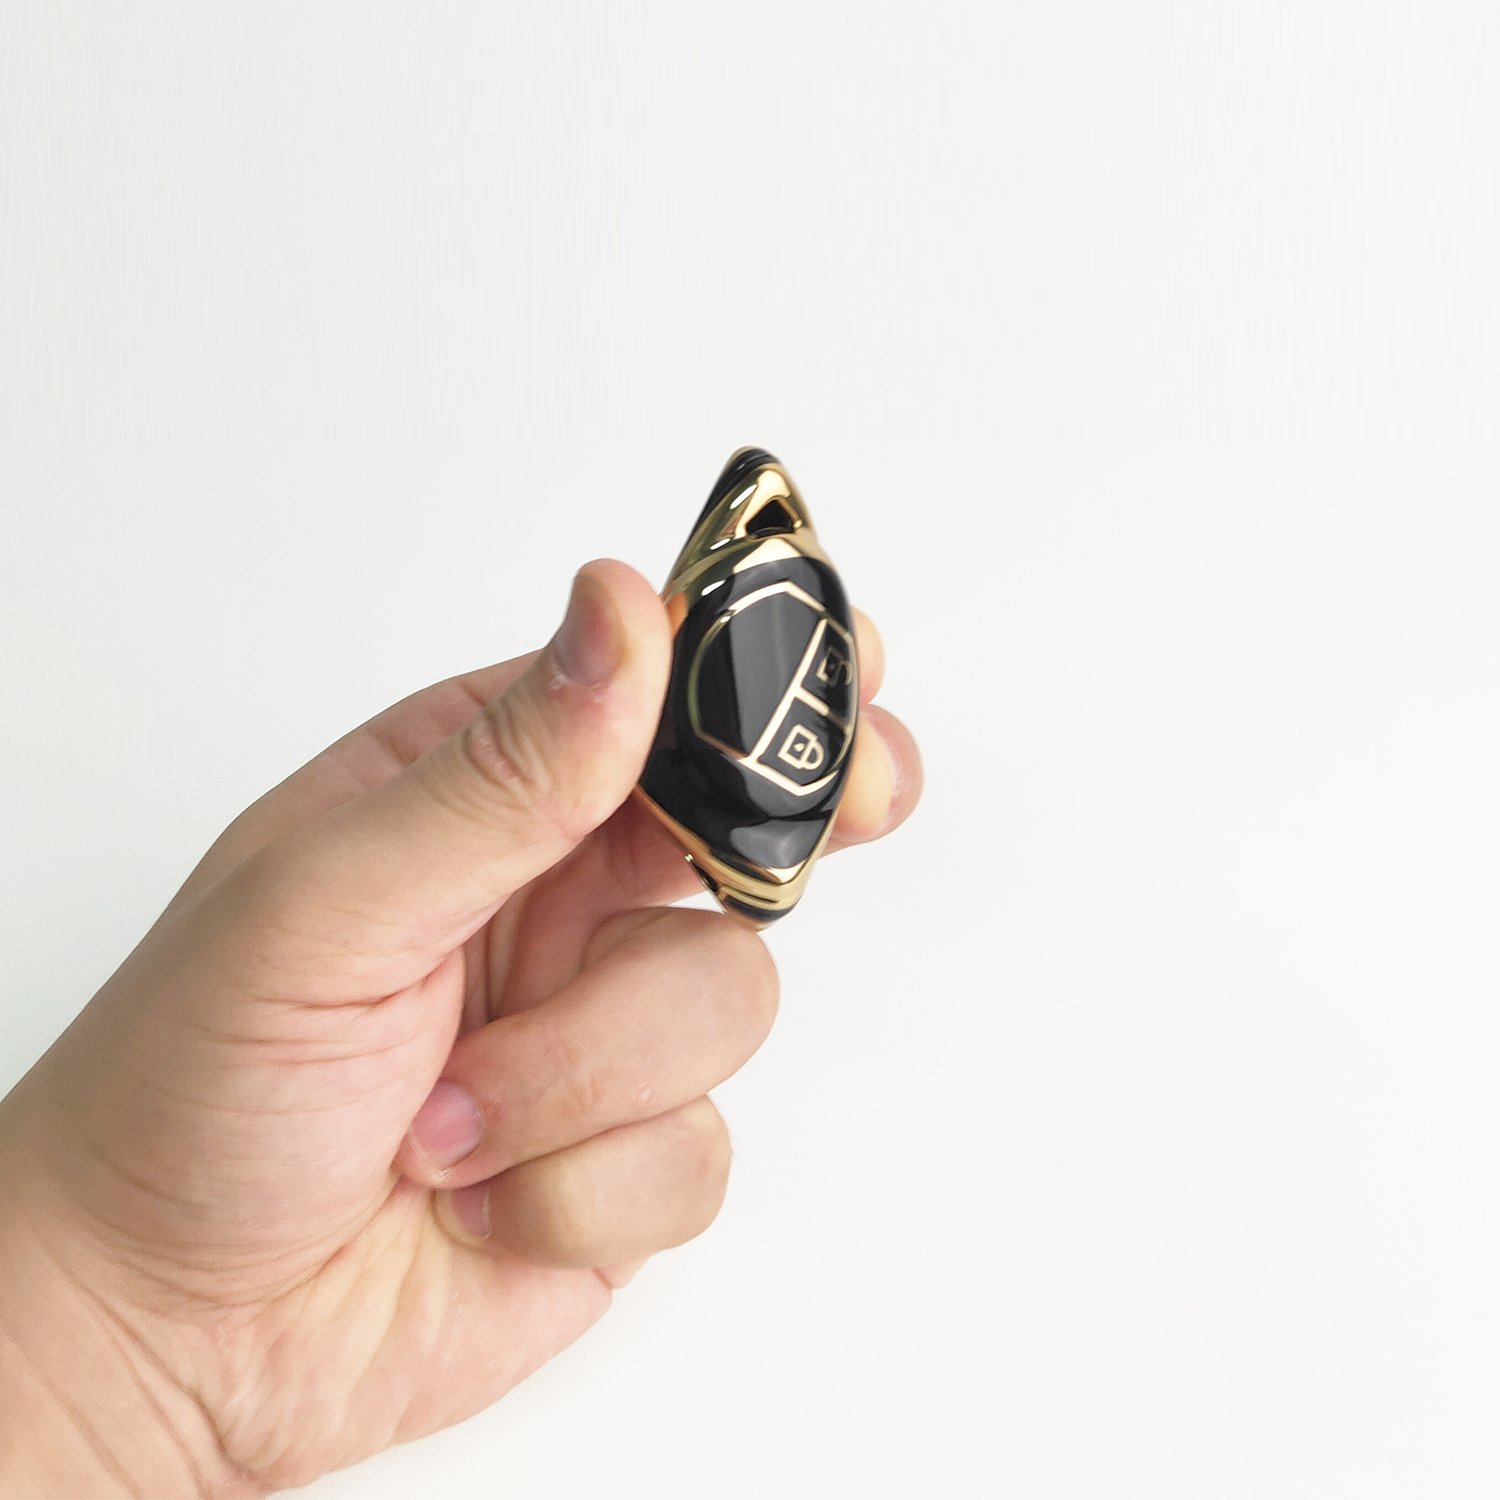 Acto TPU Gold Series Car Key Cover With Diamond Key Ring For Suzuki Ciaz